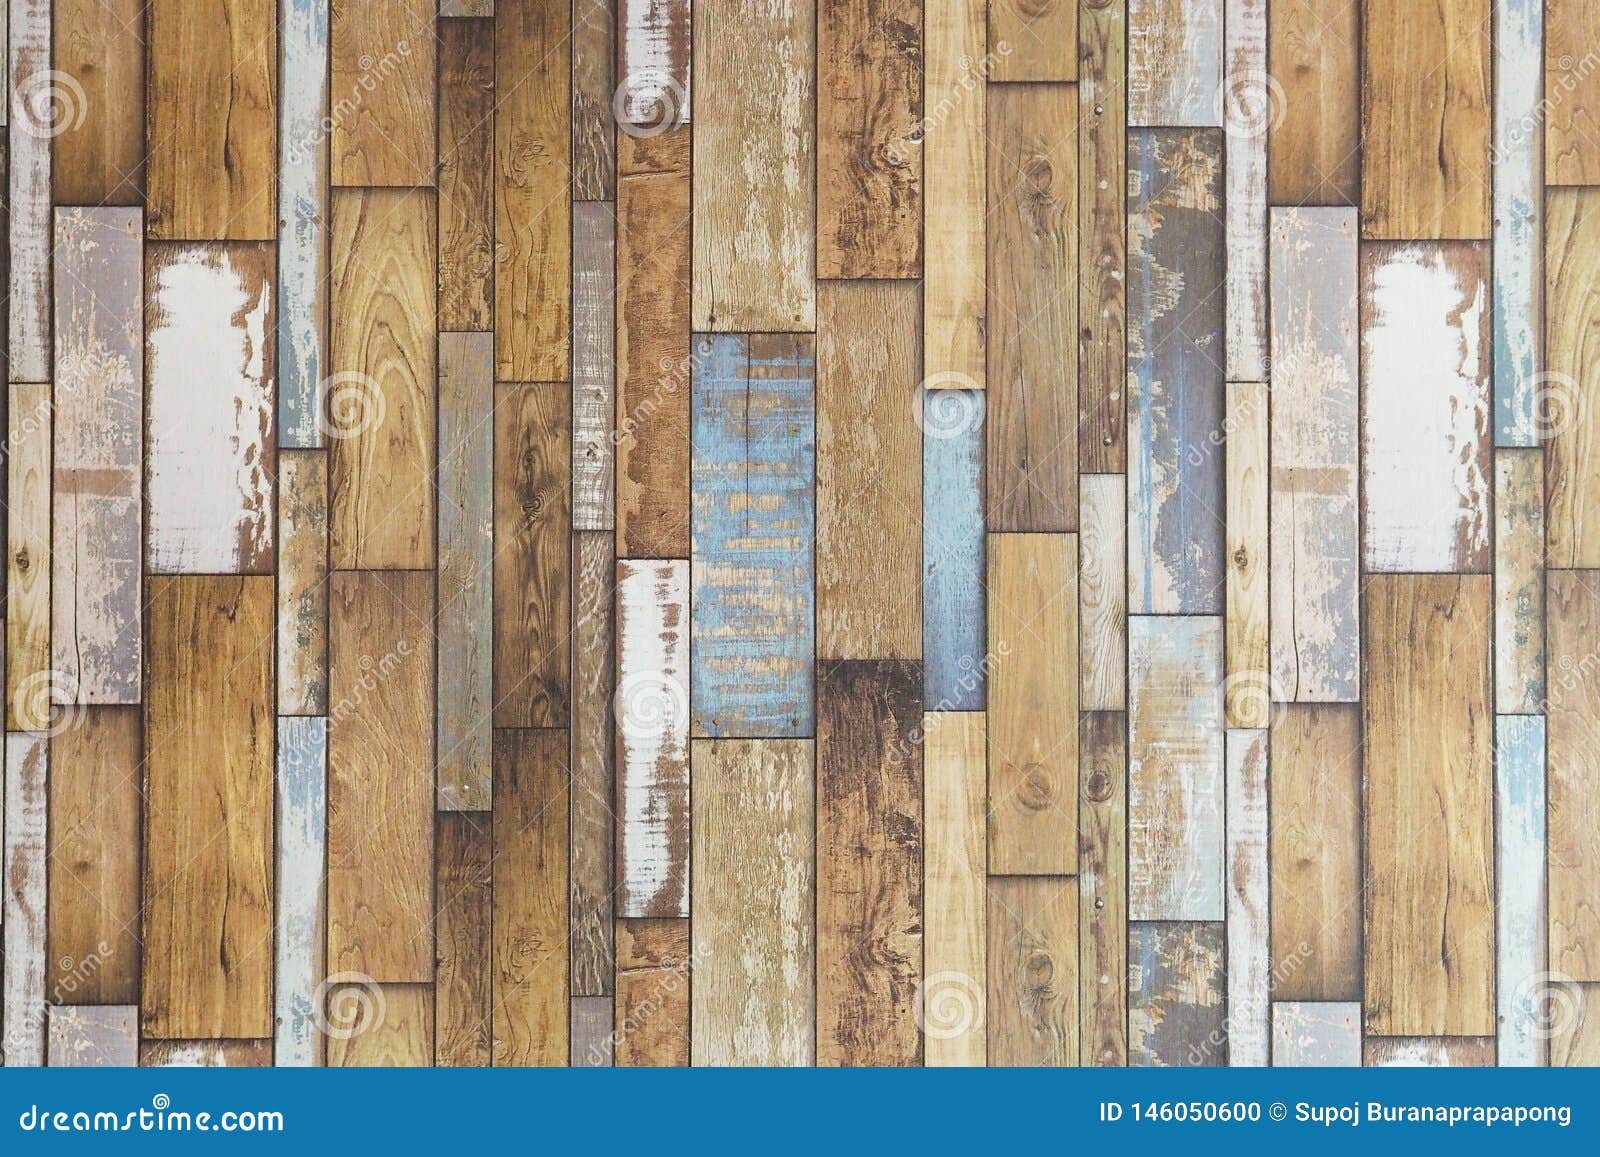 pastel wood planks texture background.vintage wooden background